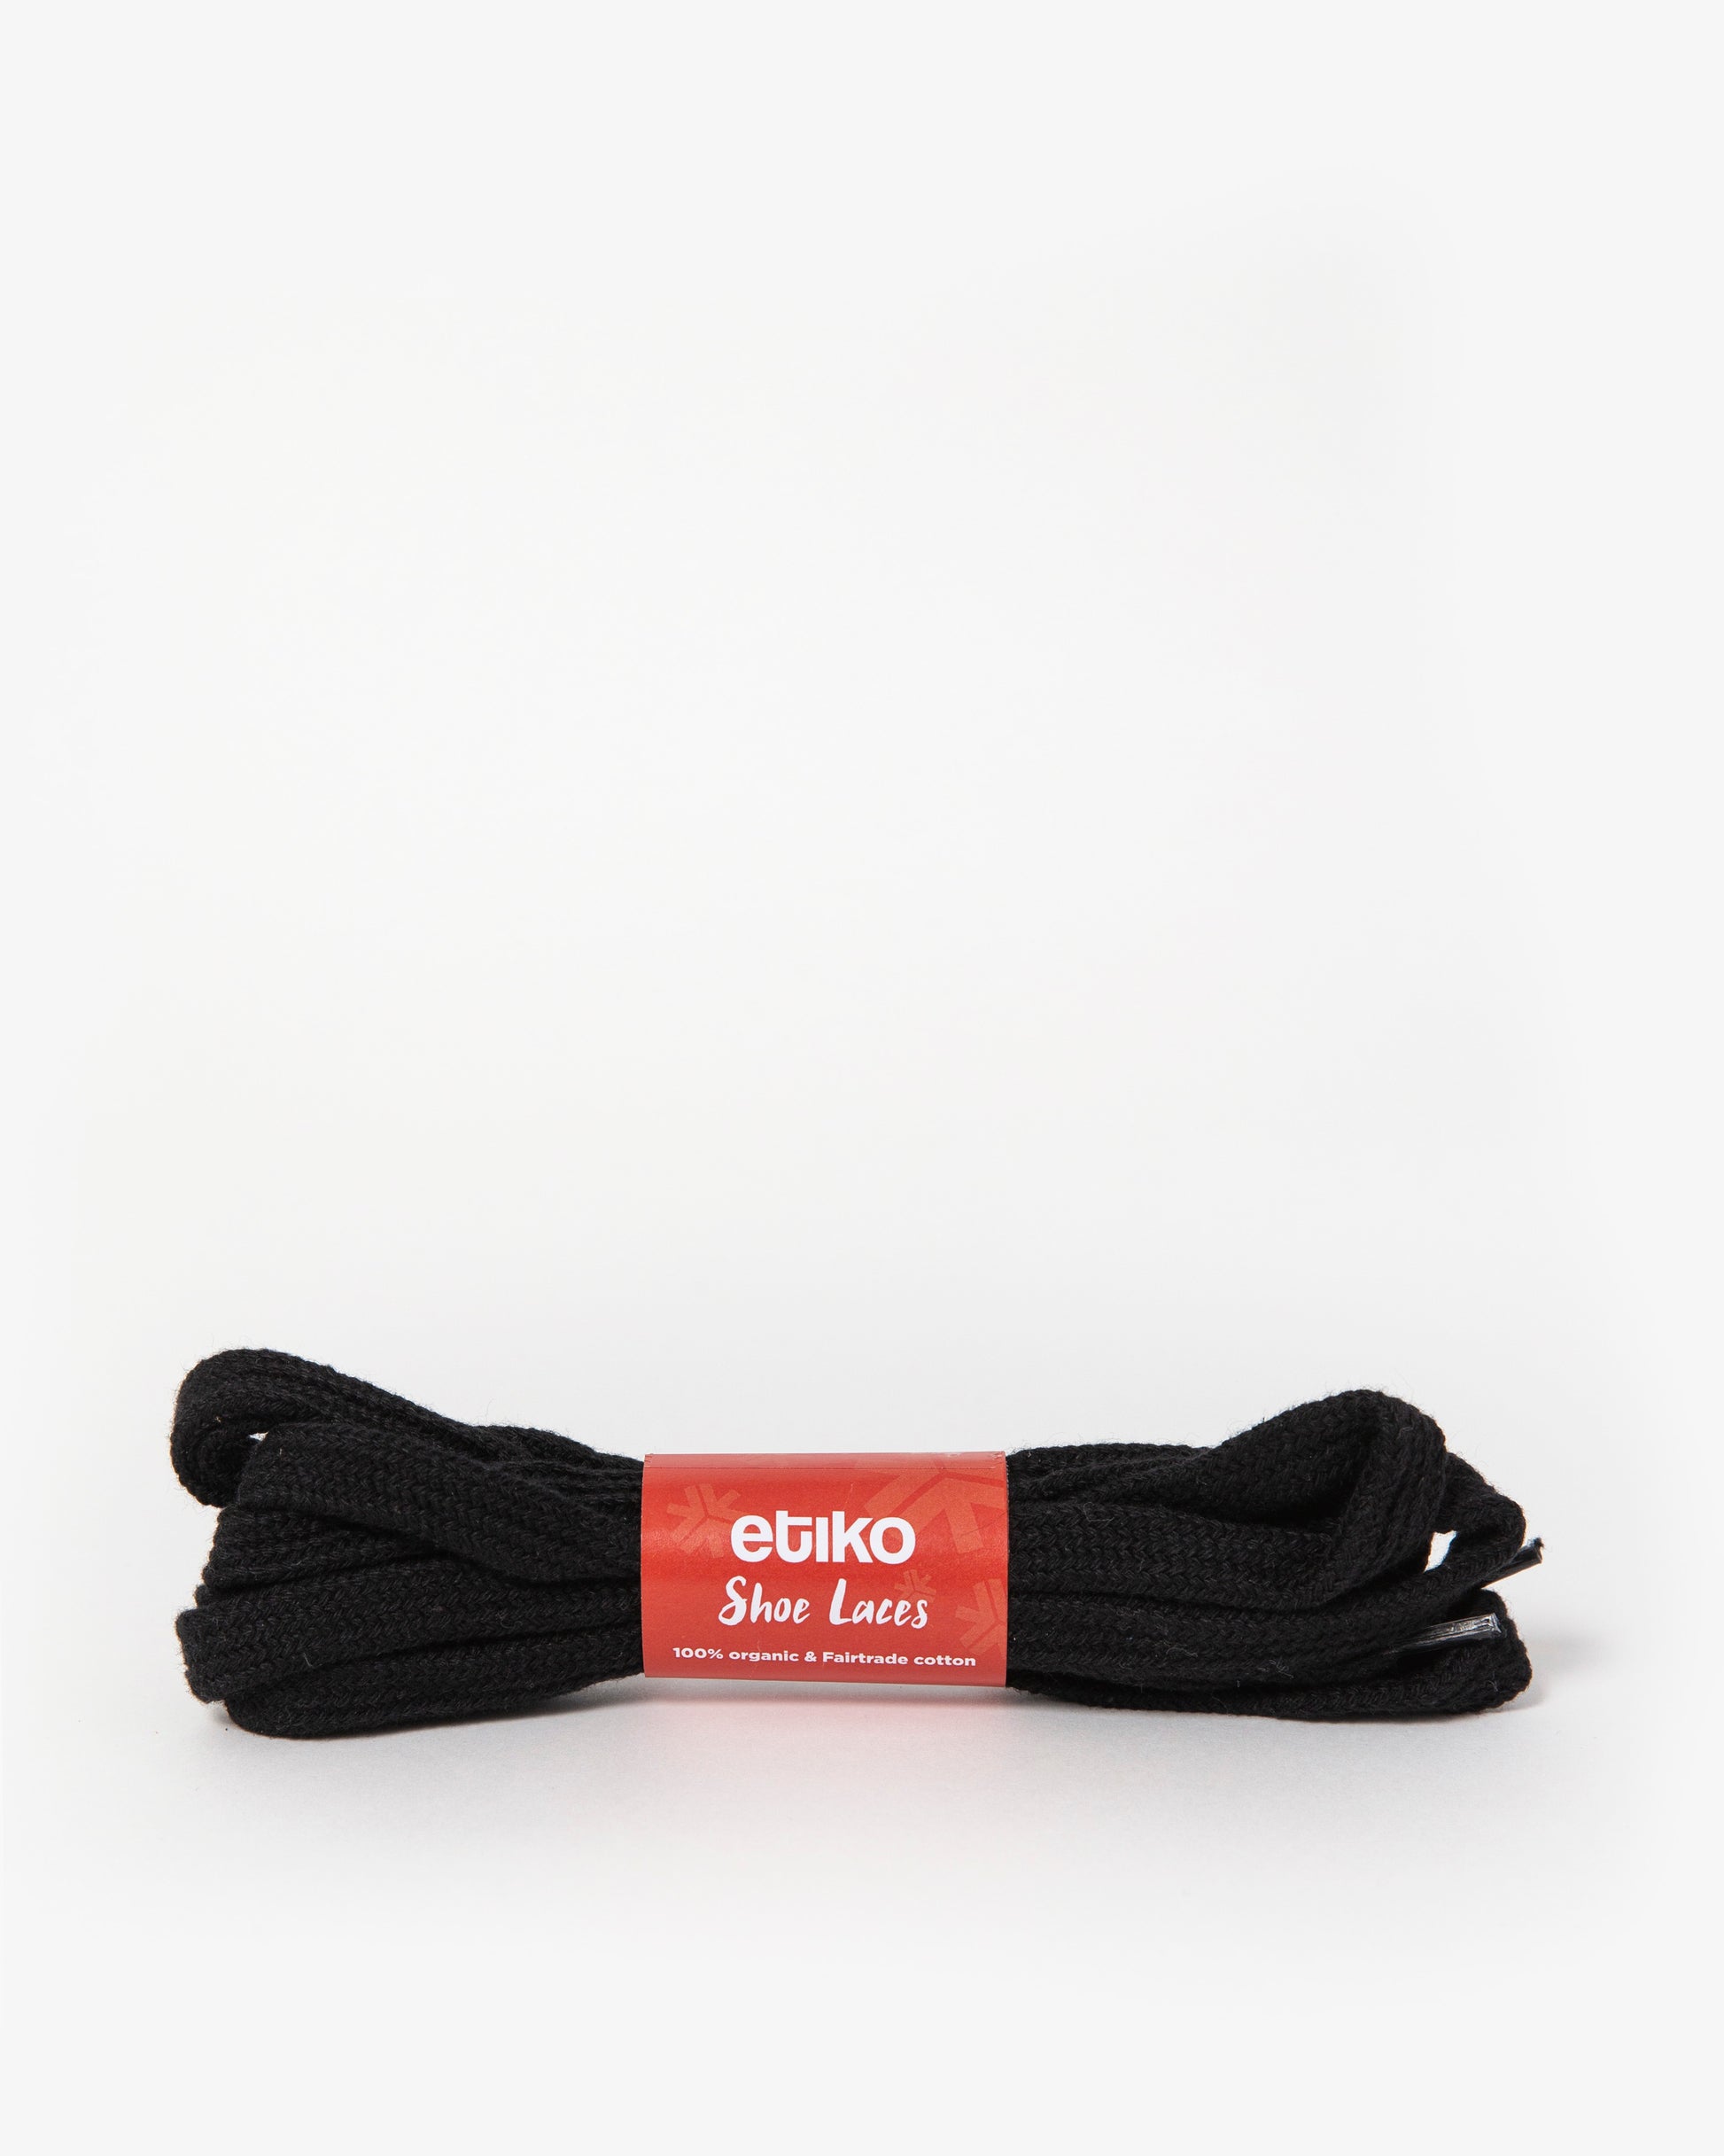 Etiko Fairtrade Certified Low Cut Black Shoelaces, Eco-Friendly